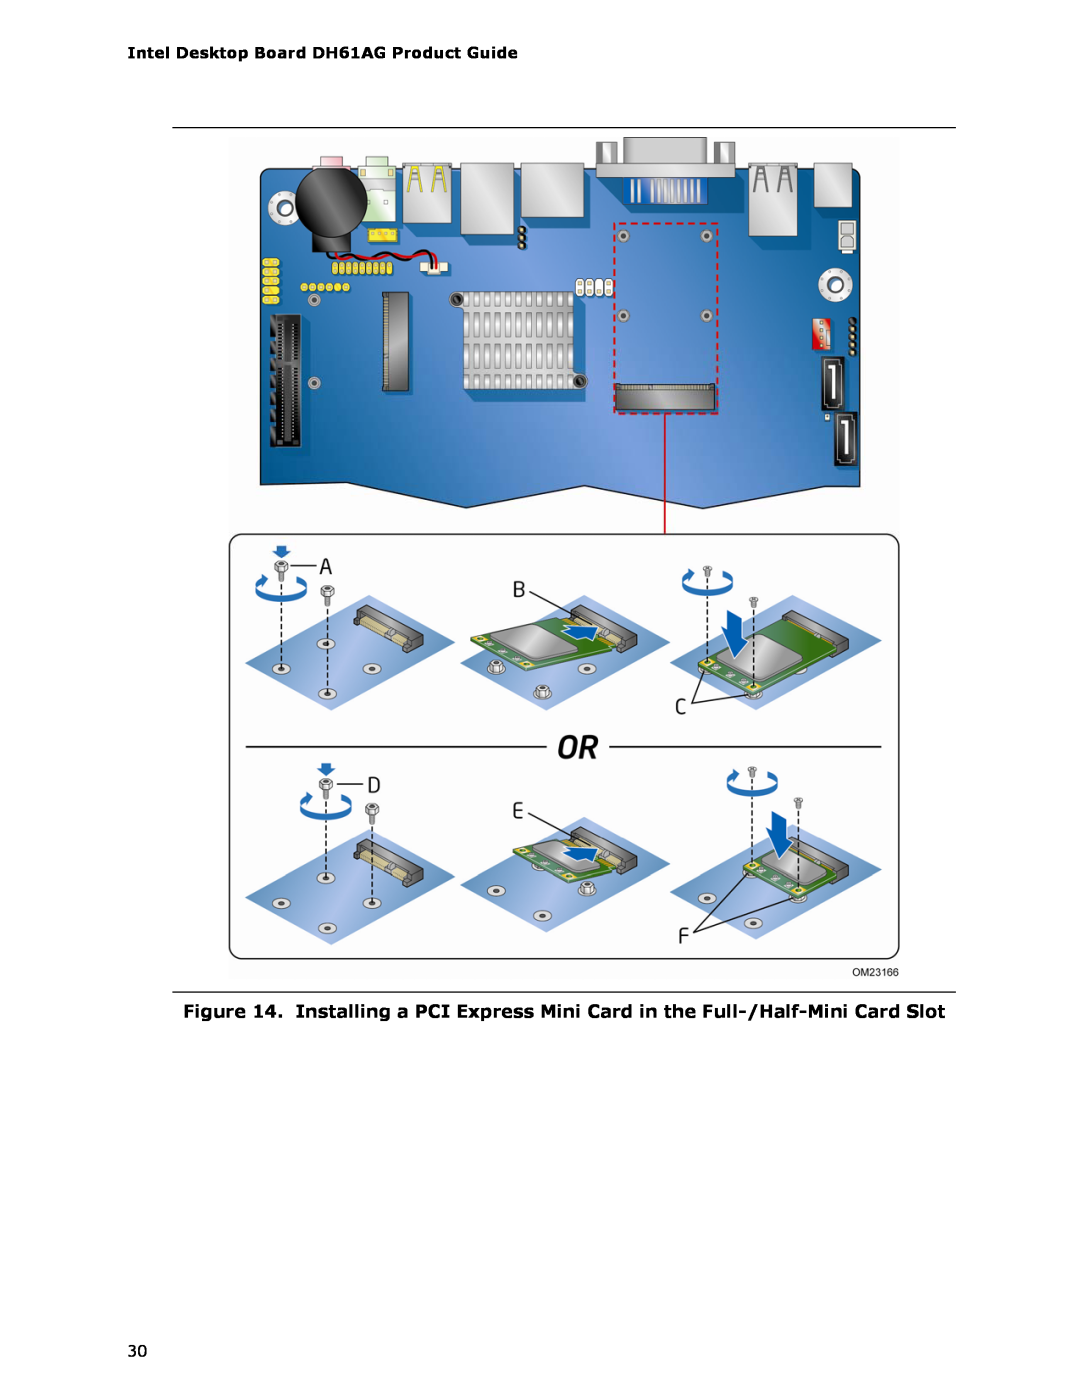 Intel BOXDH61AG manual Intel Desktop Board DH61AG Product Guide 